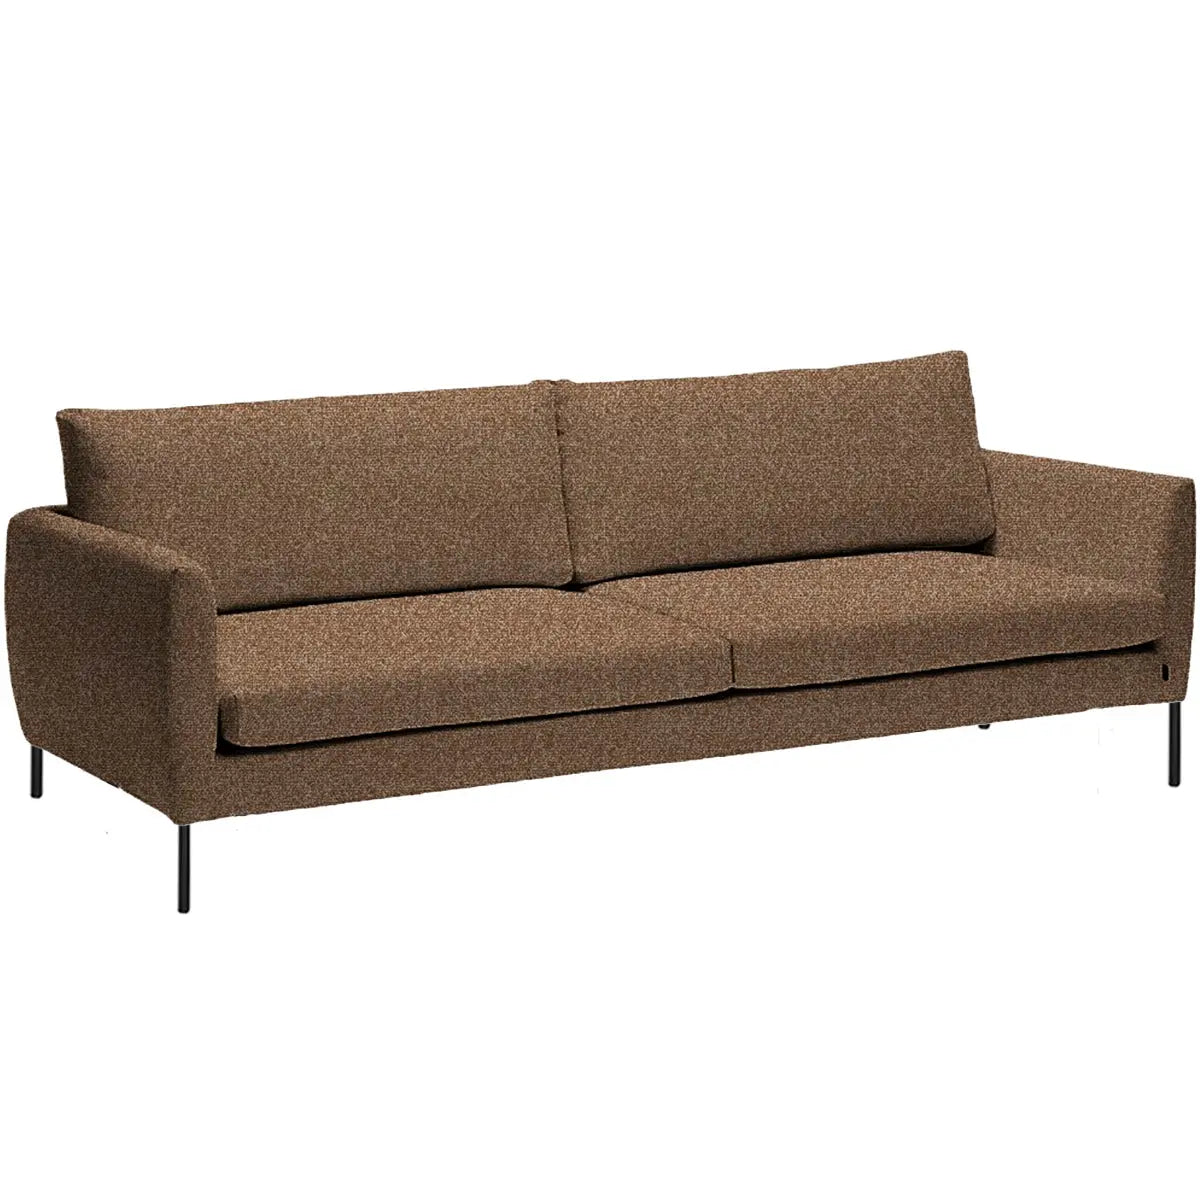 Curve 3h-sohva 233 cm, Silent-kangas